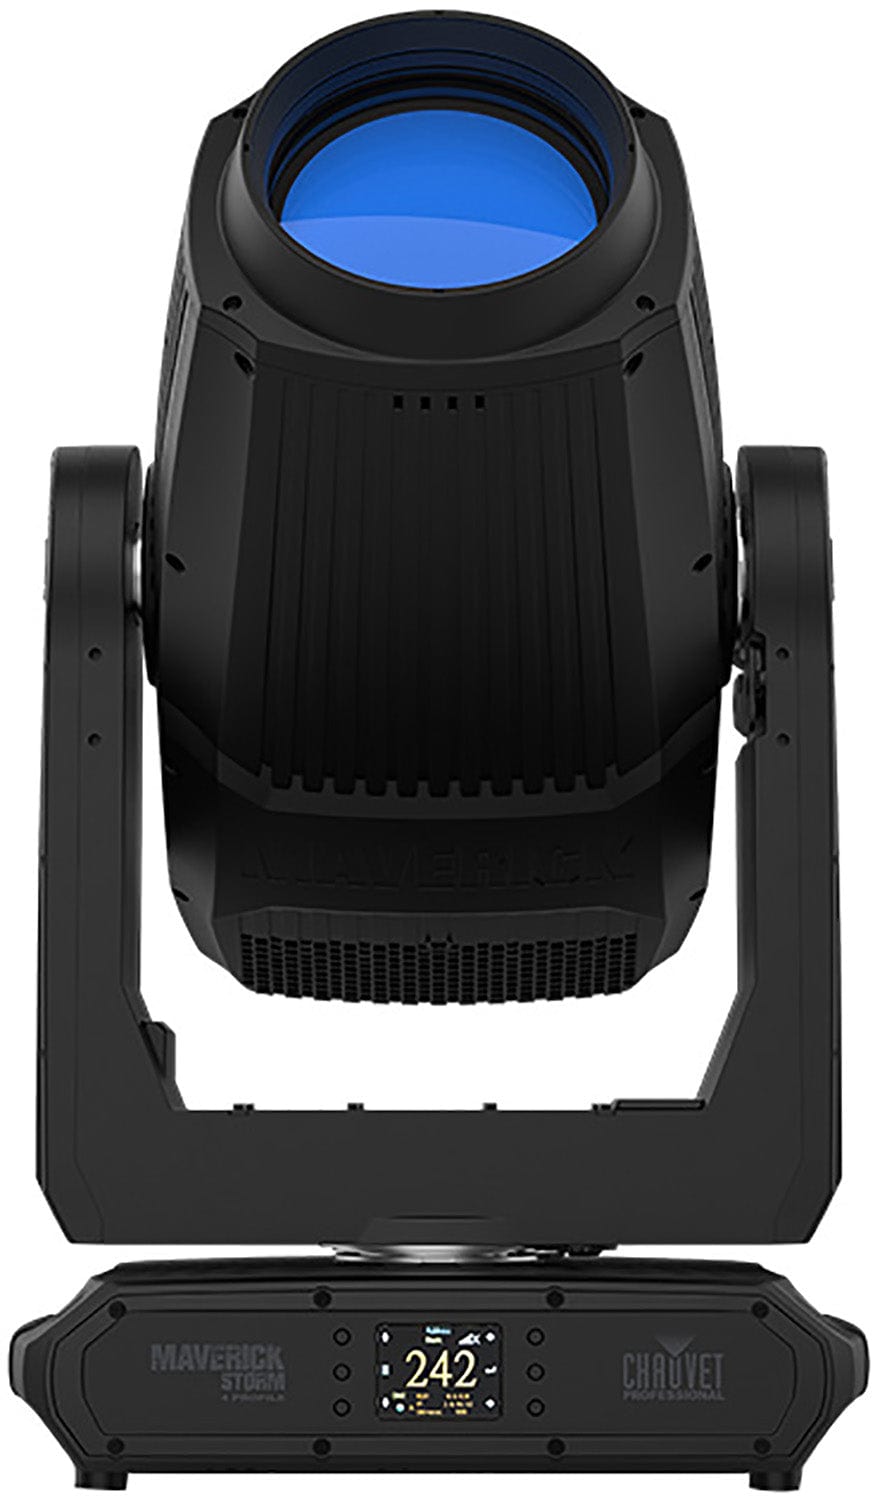 Chauvet Pro Maverick STORM 4 Profile Moving Head Light - PSSL ProSound and Stage Lighting